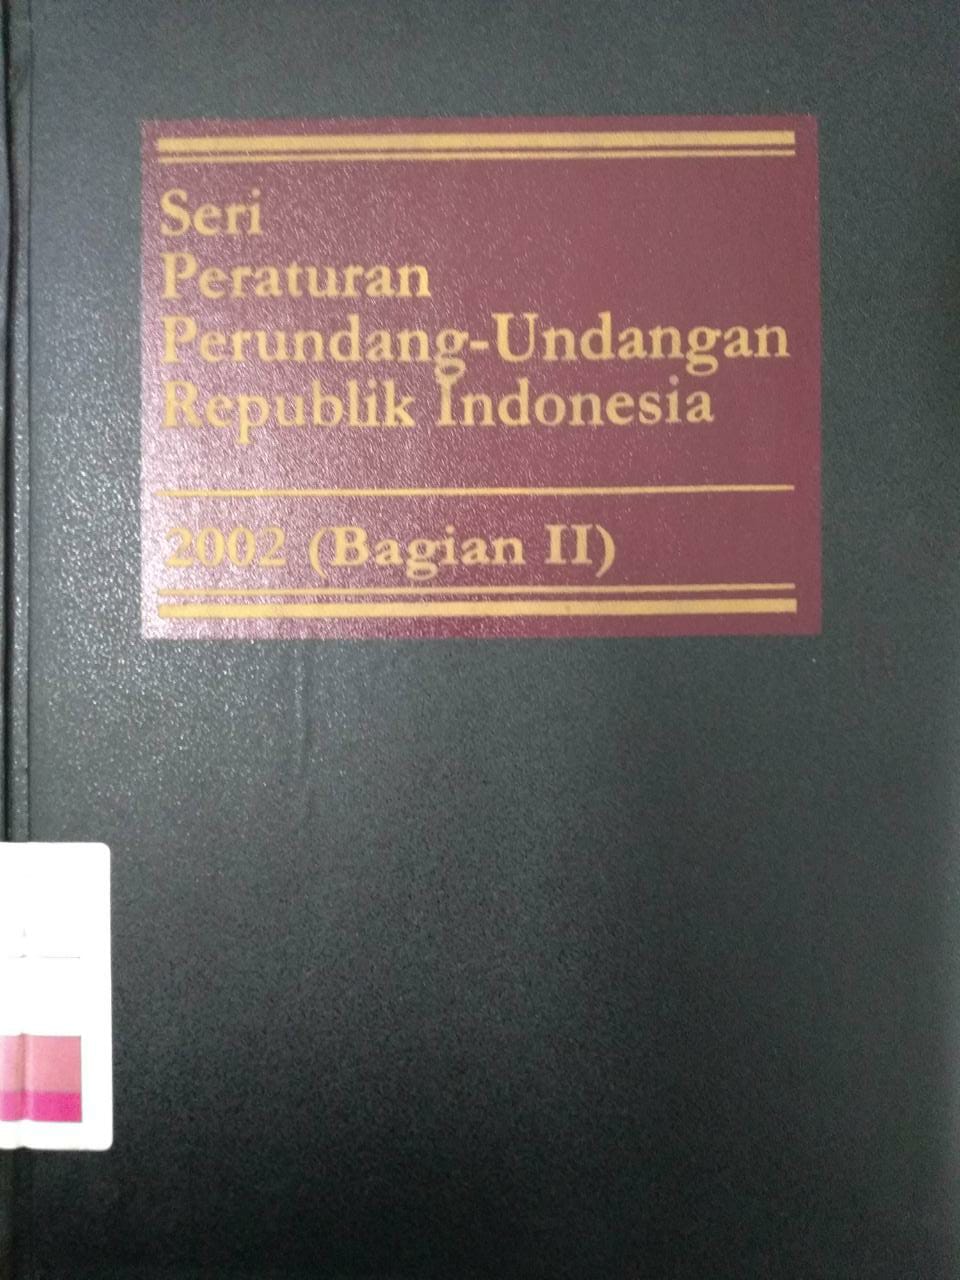 Seri Peraturan Perundang-undangan Republik Indonesia 2005 (Bagian IV). Jilid 1